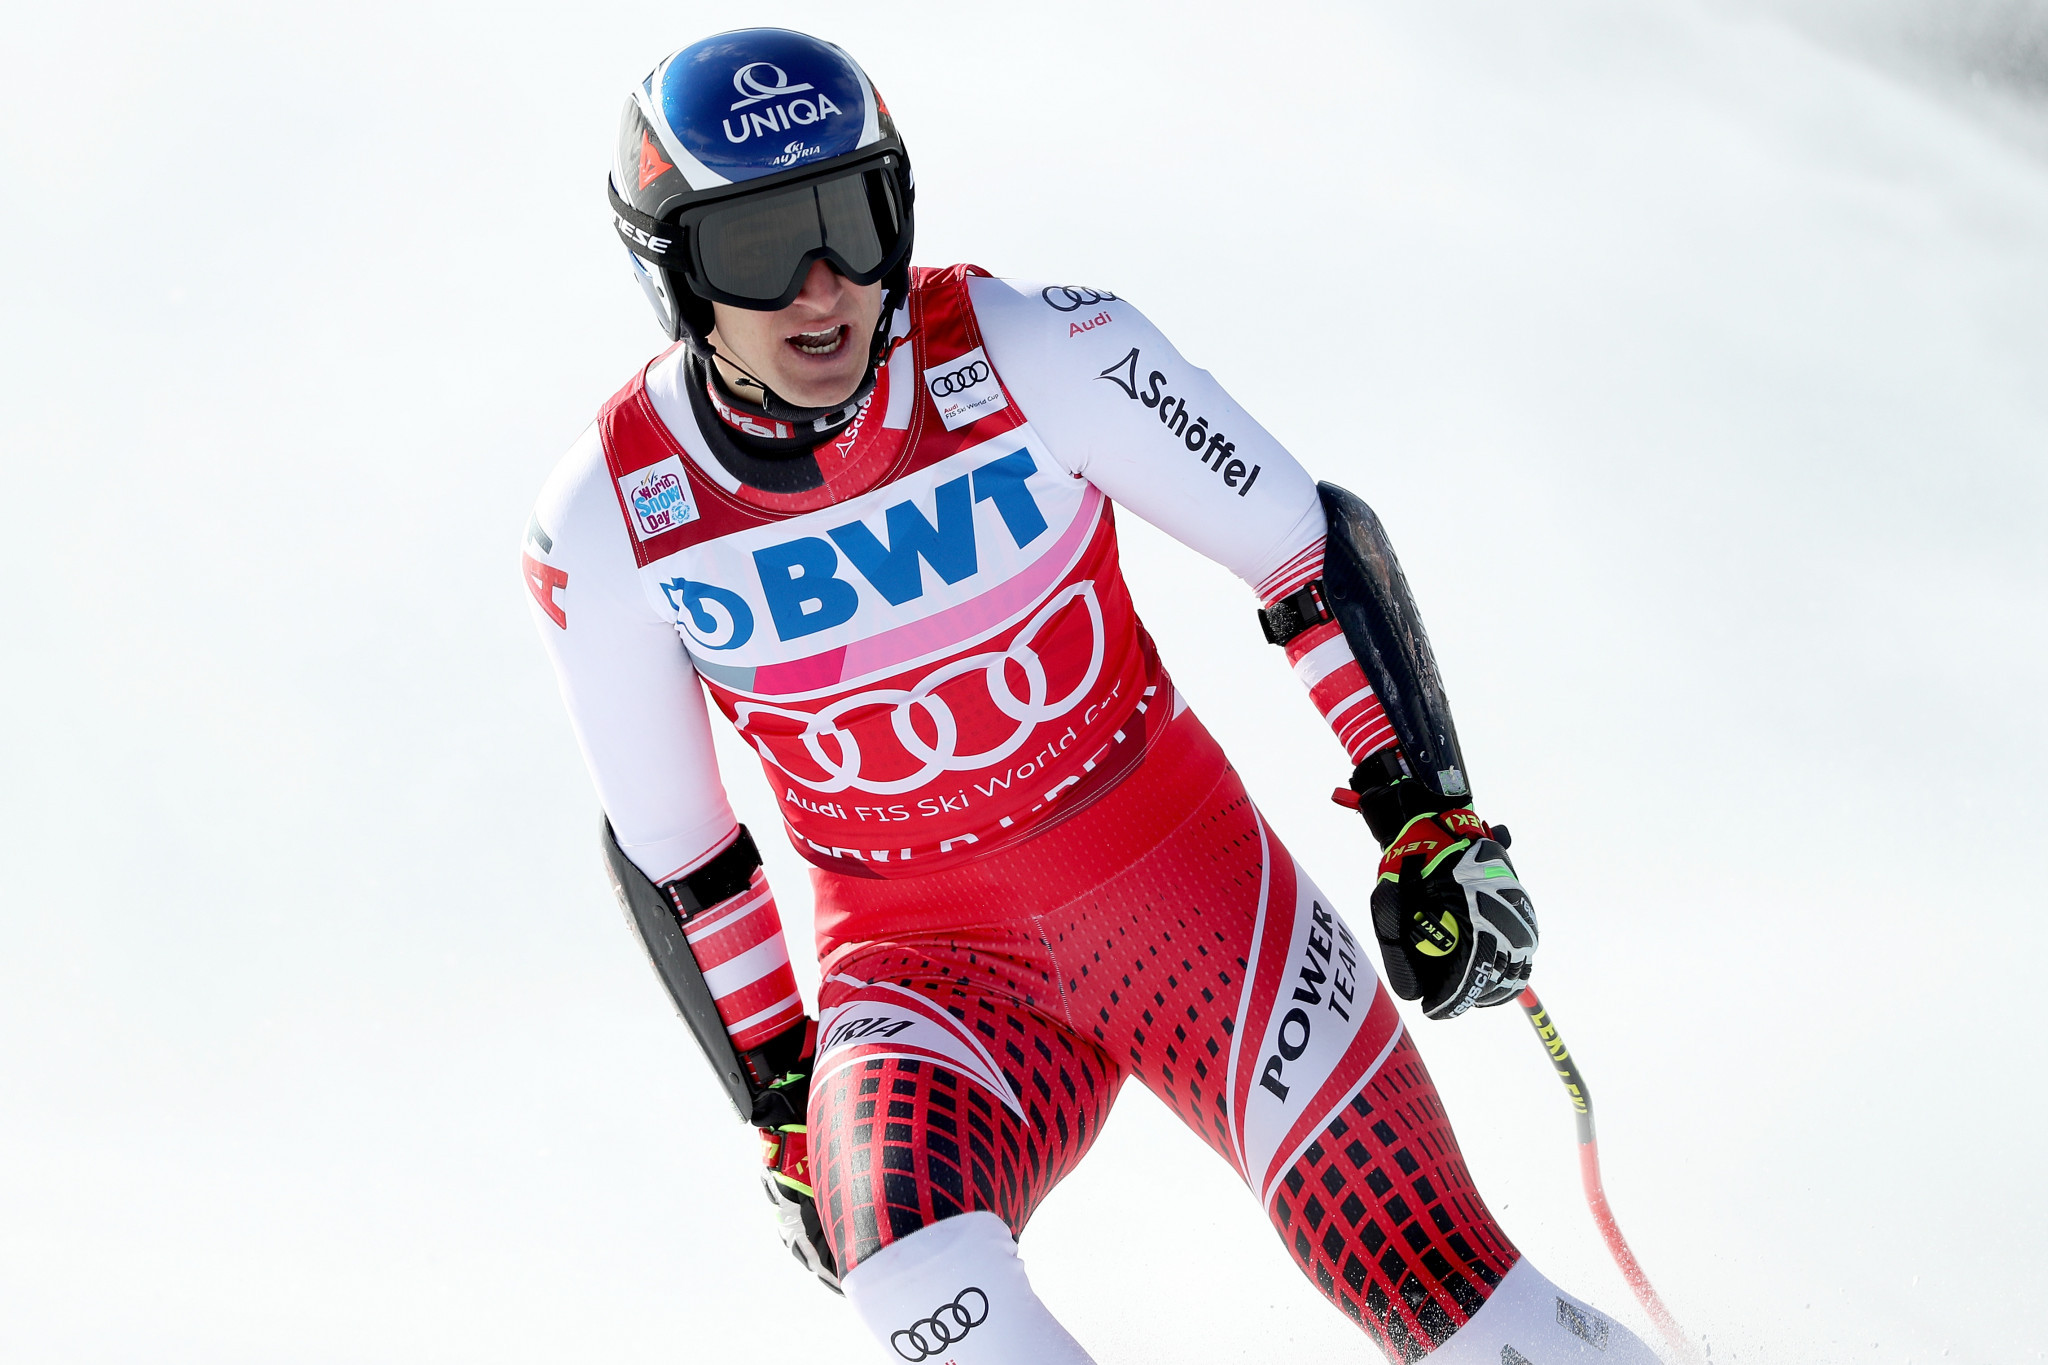 Mayer edges out Pinturault in FIS Alpine Combined in Wengen